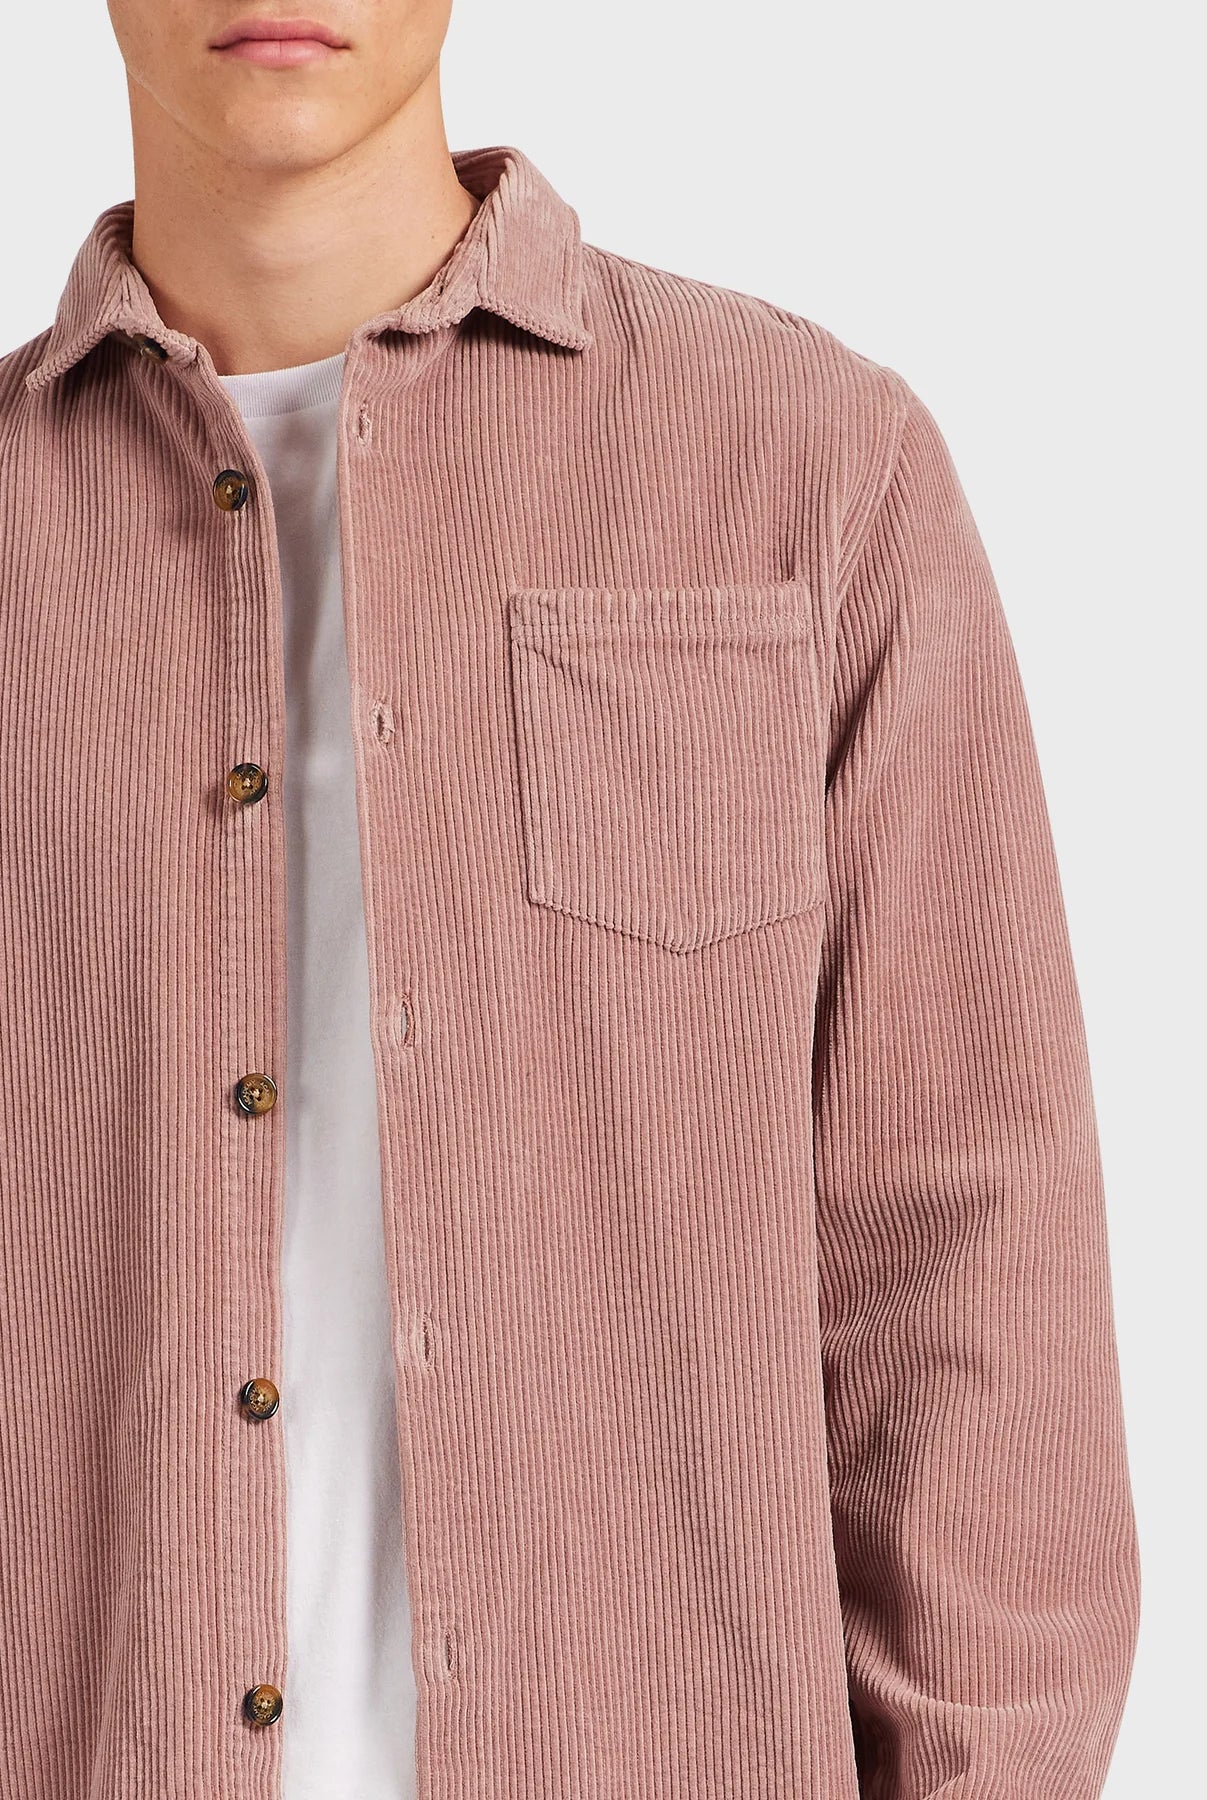 Lebowski Cord Overshirt in Chalk Pink